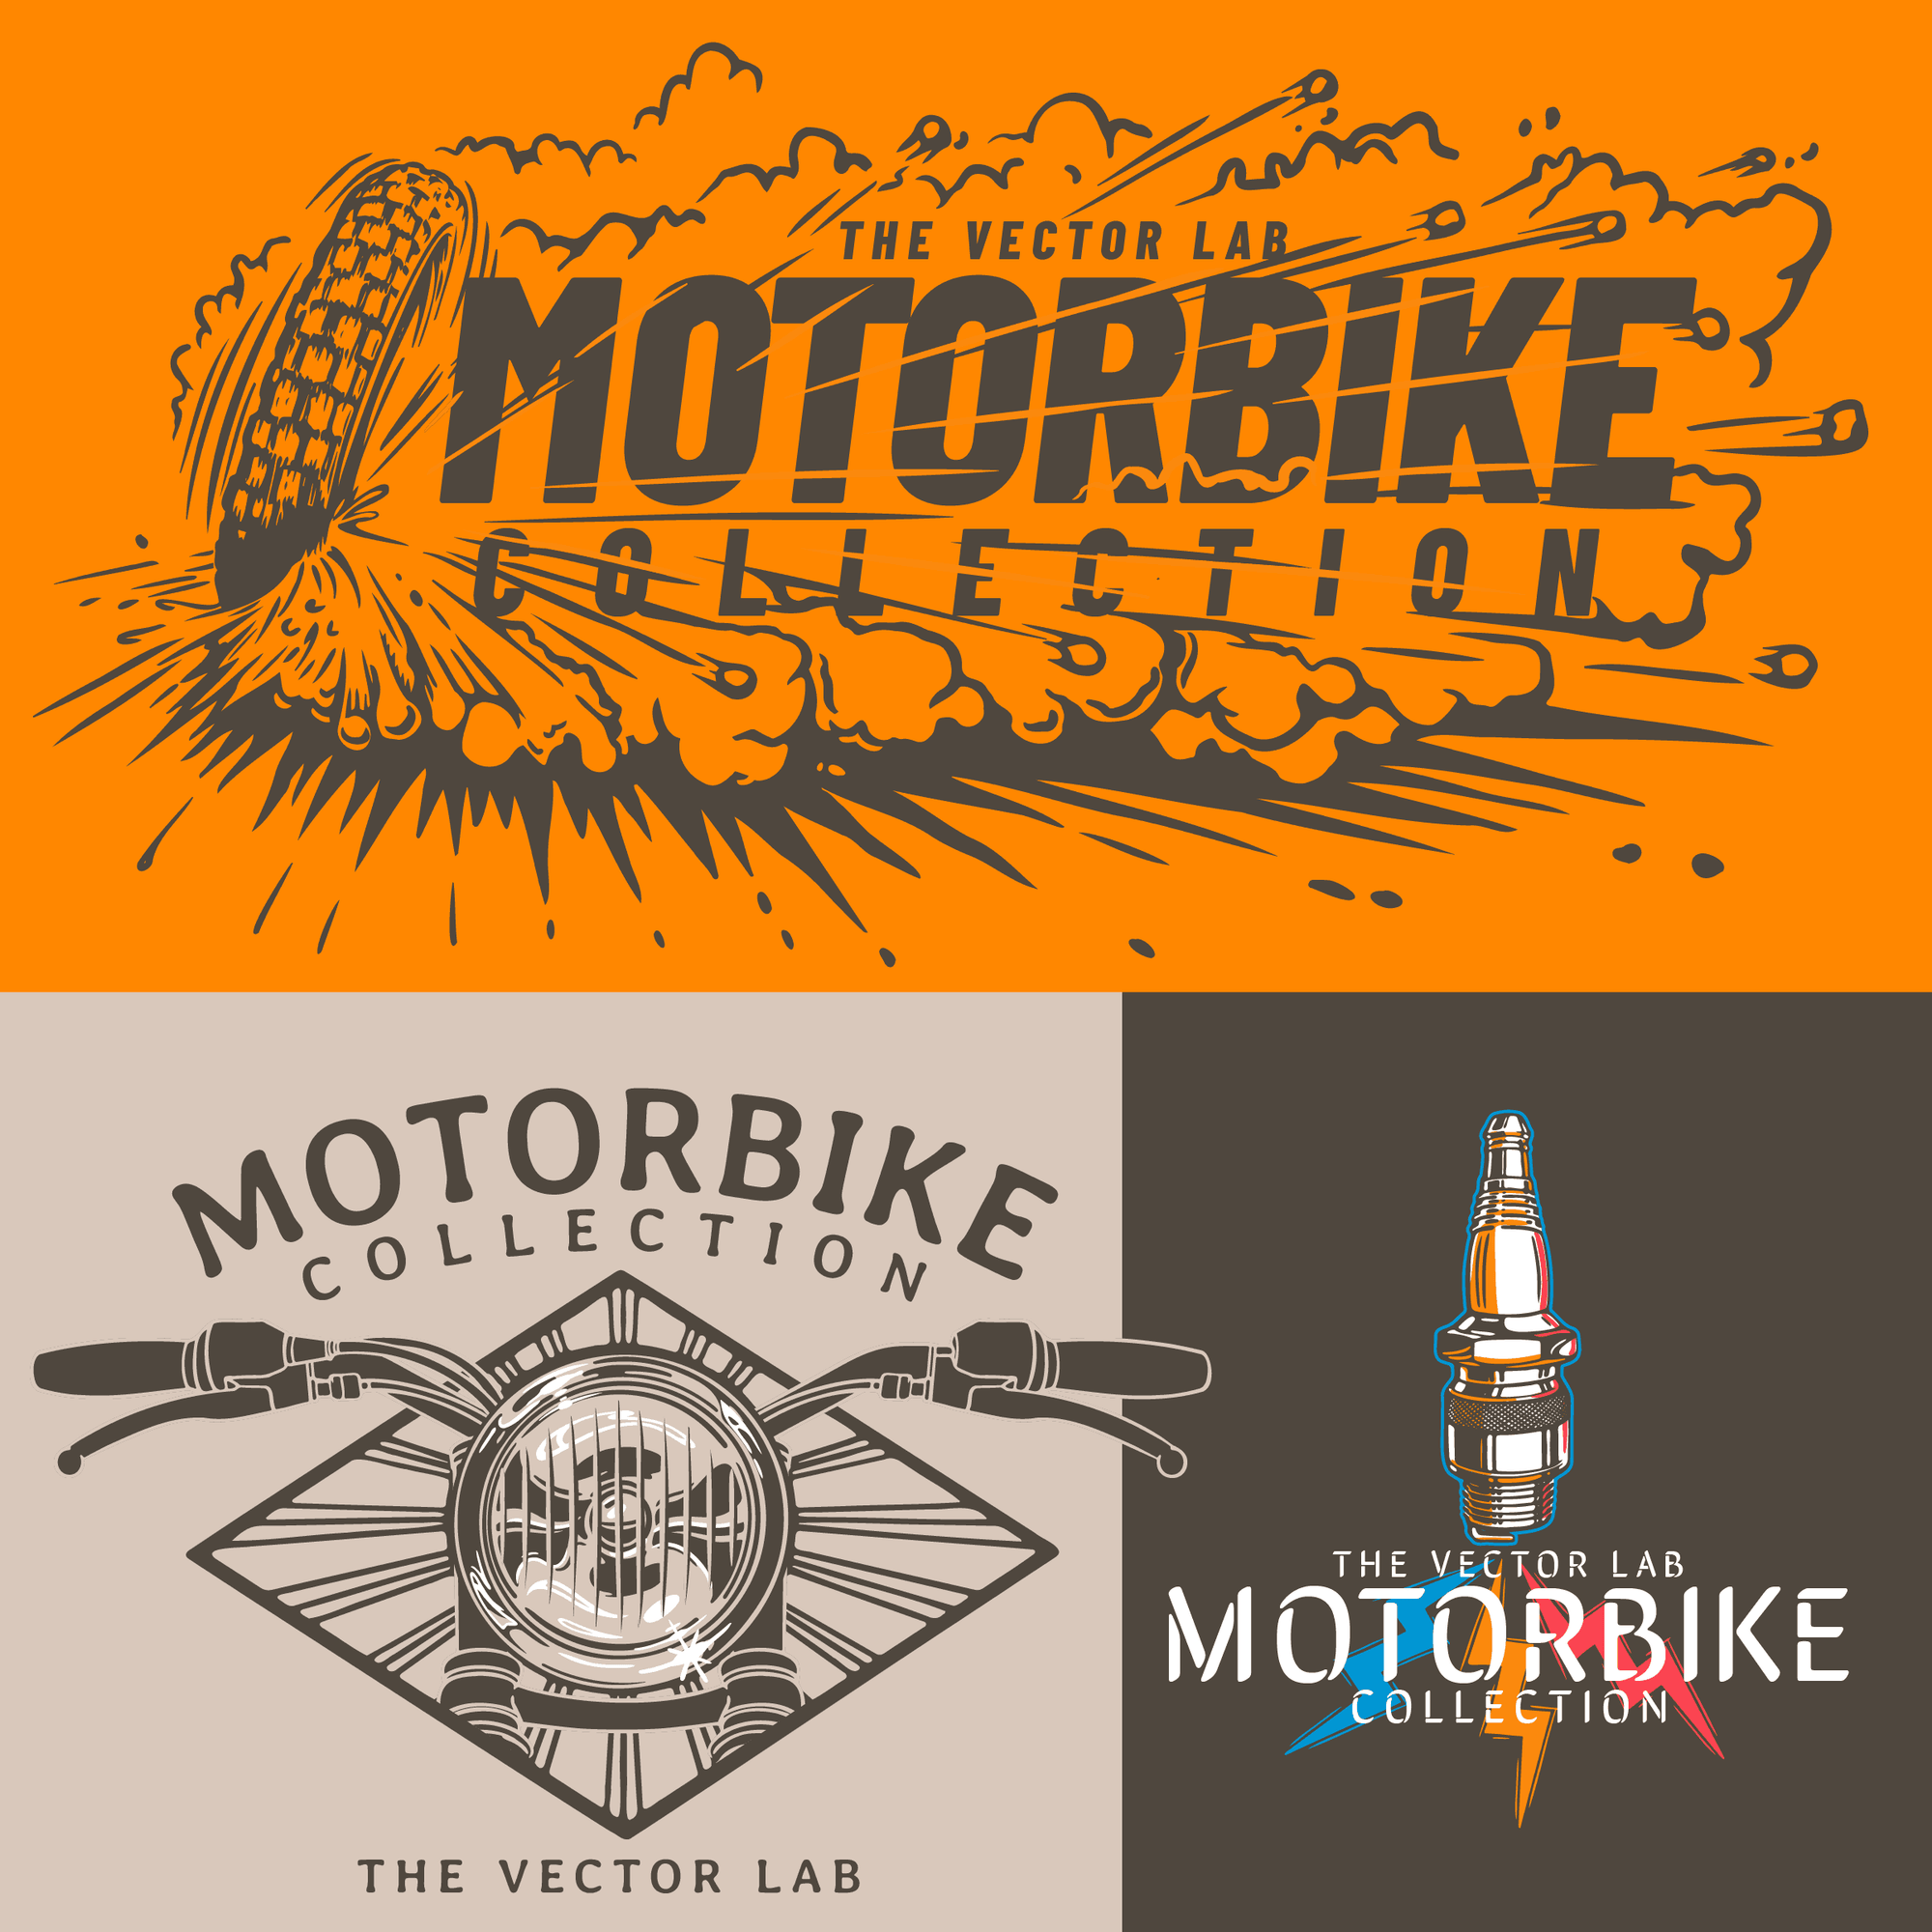 Motorbike Graphic Logo Templates